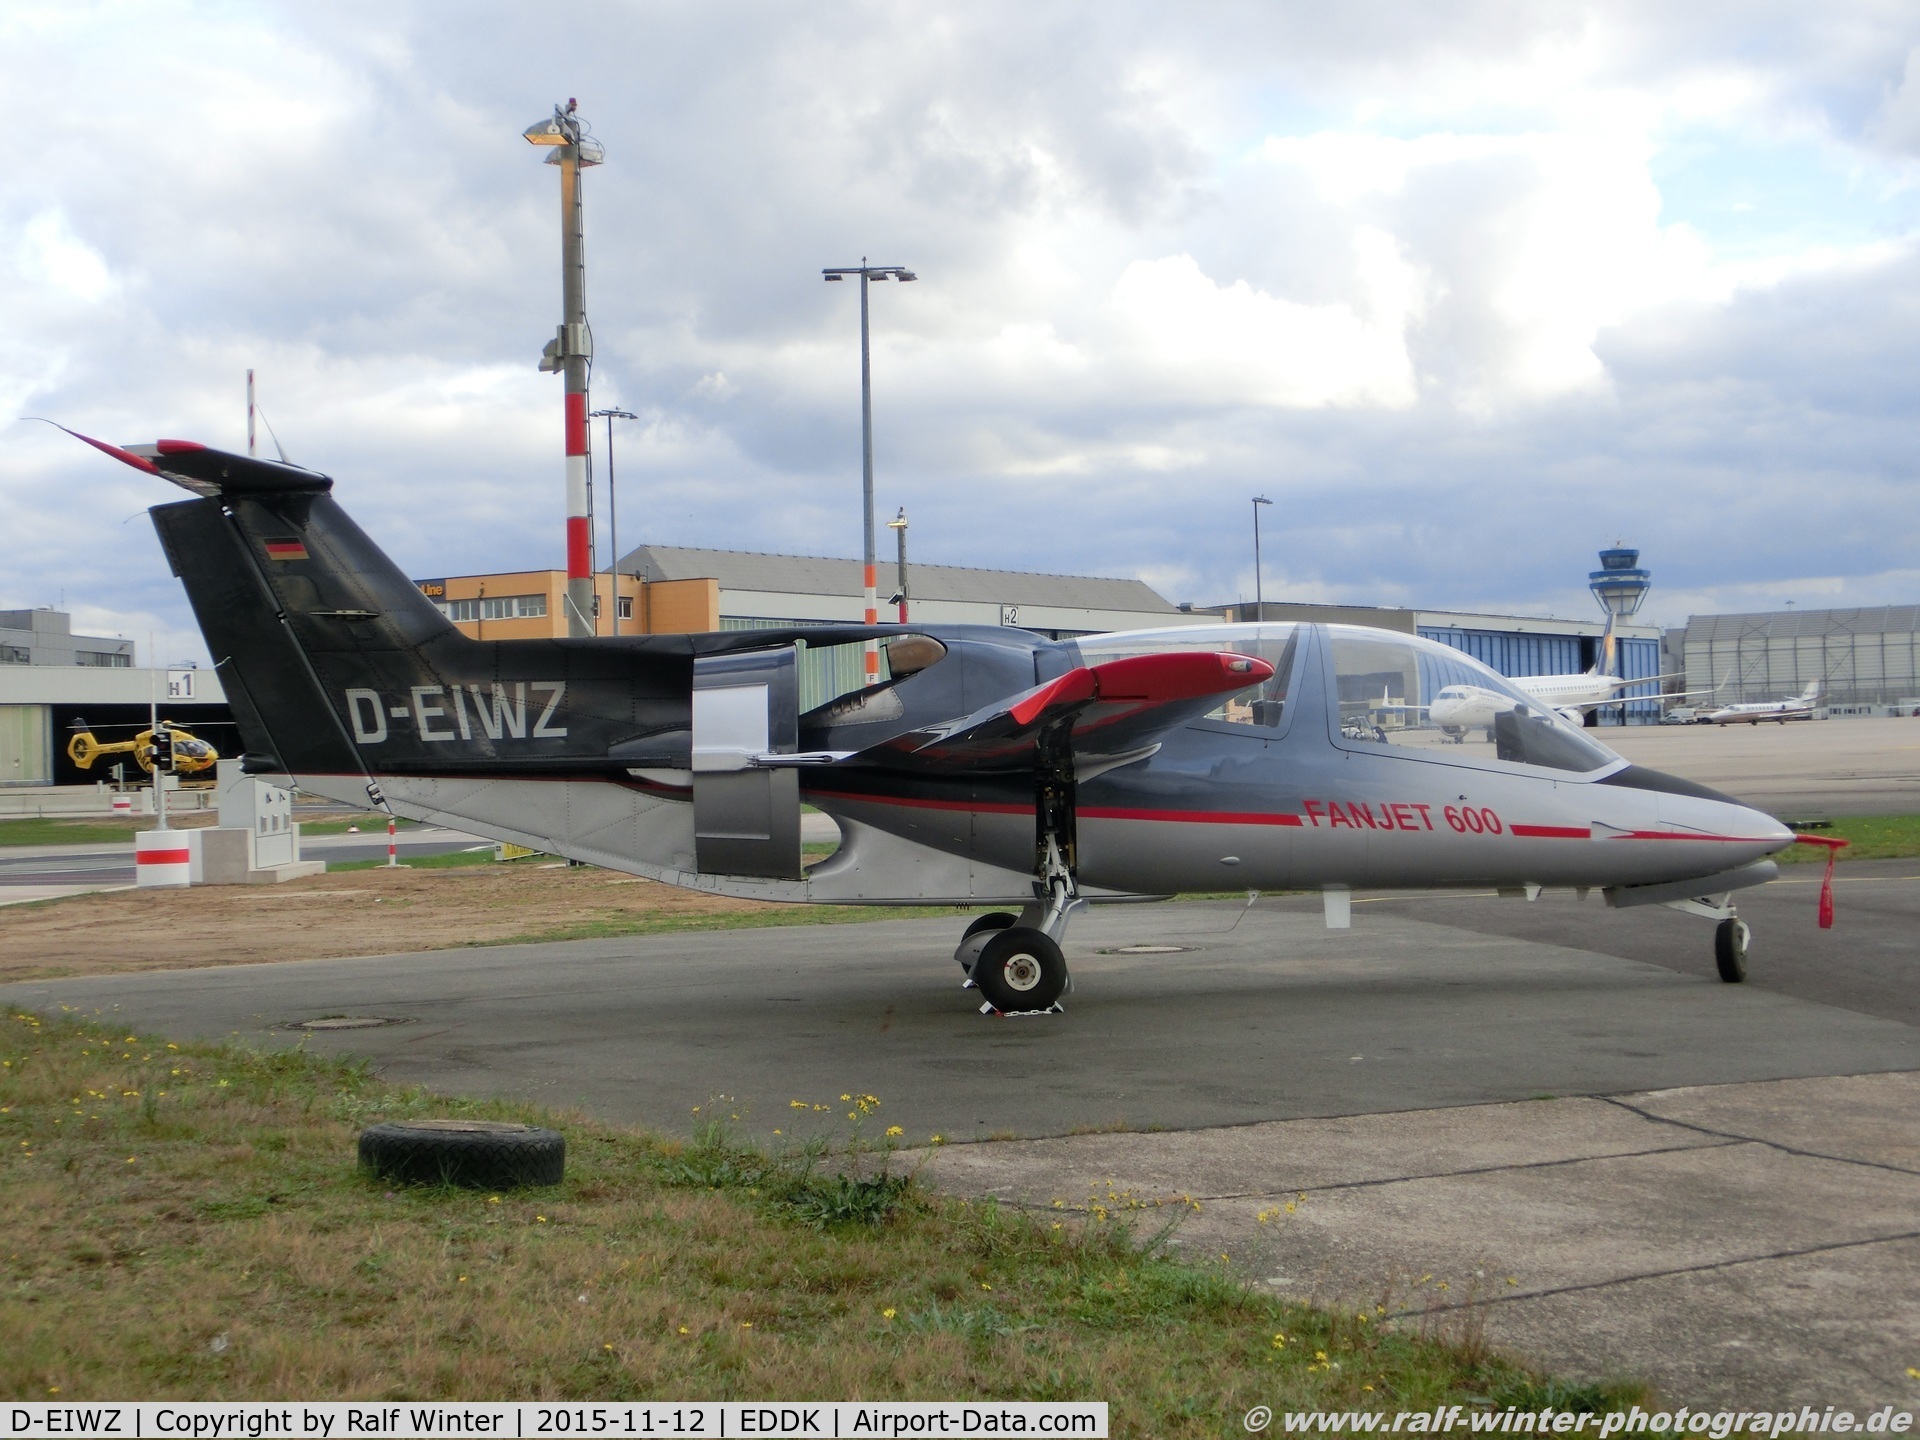 D-EIWZ, RFB Fantrainer 600 C/N 005, Rhein-Flugzeugbau Fantrainer 600 - Private - 005 - D-EIWZ - 12.11.2015 - CGN